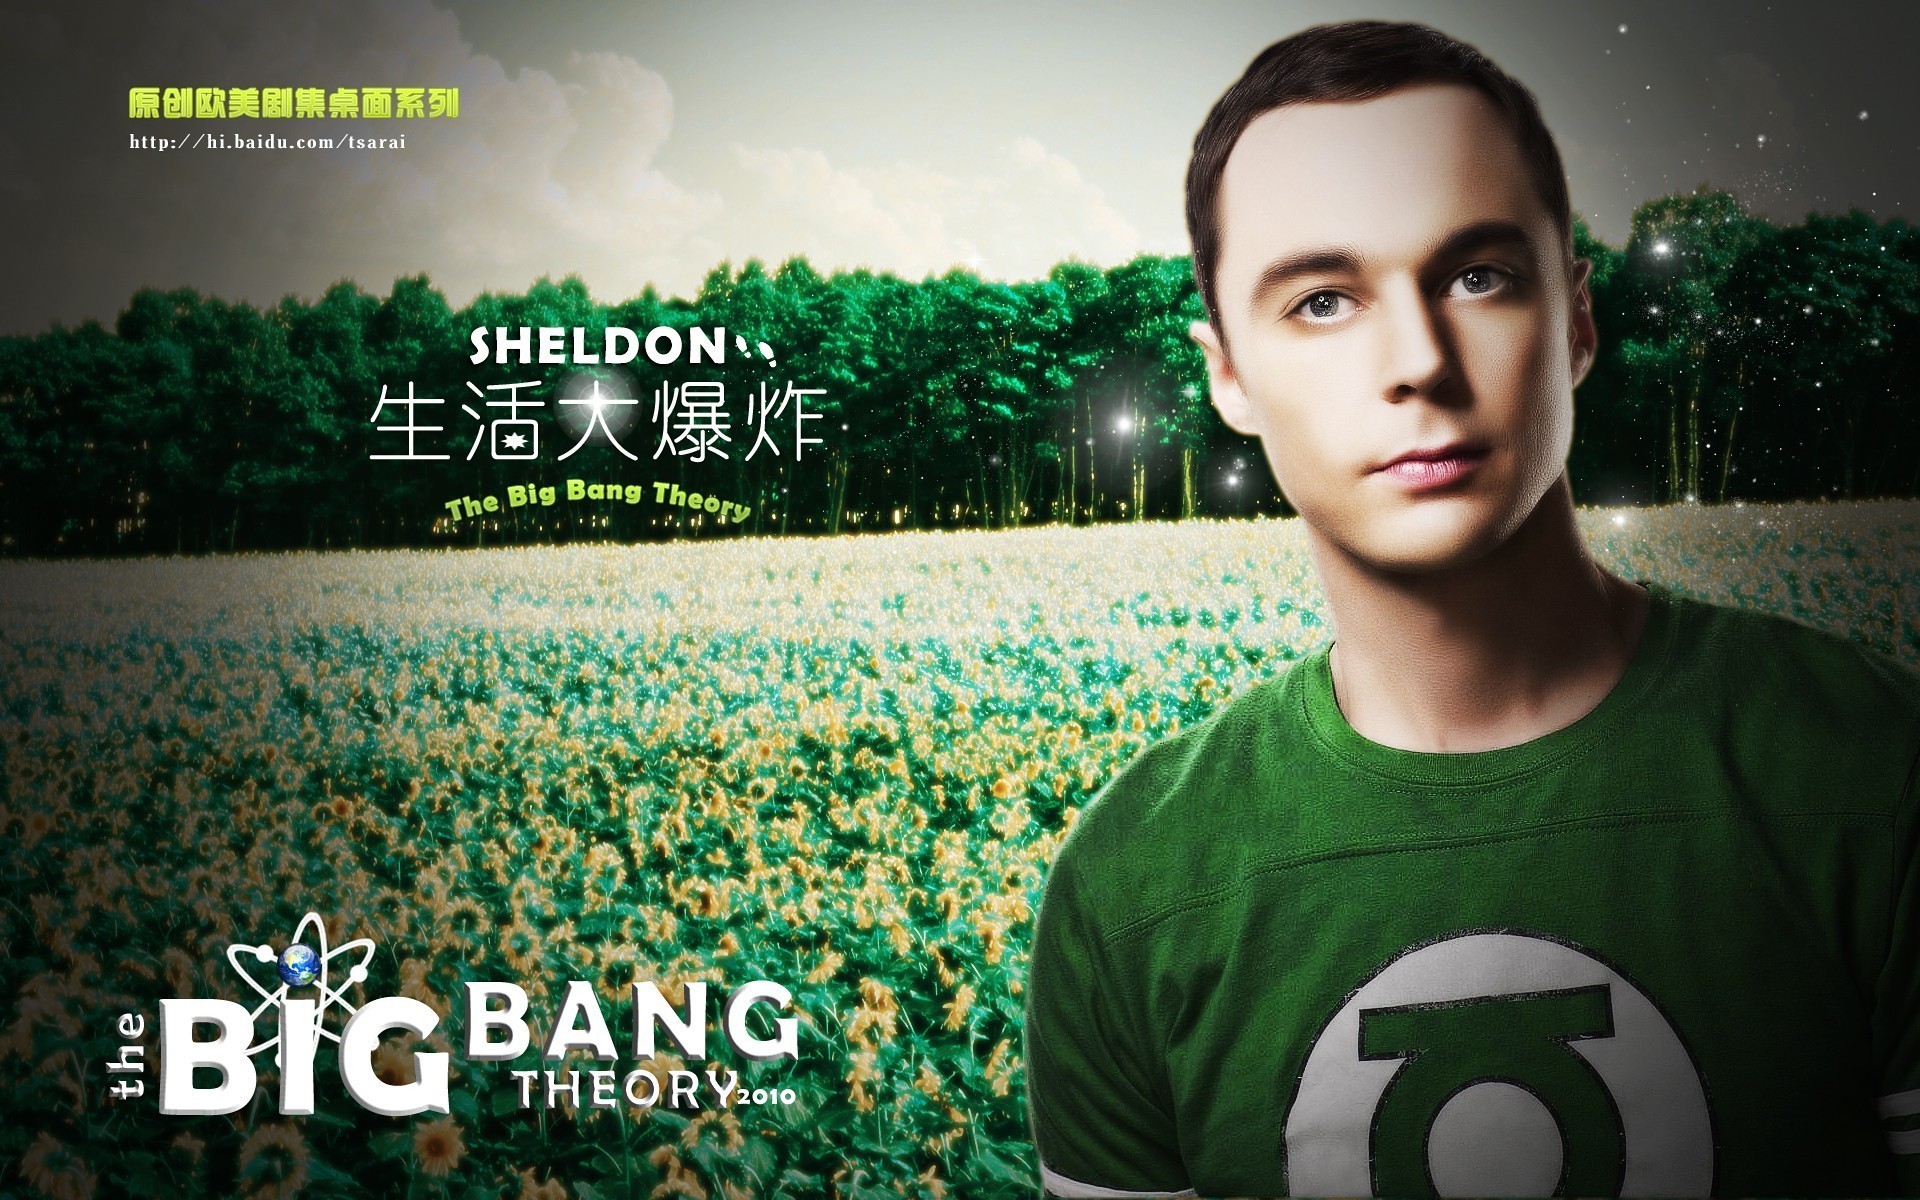 The Big Bang Theory Image Sheldon HD Wallpaper And Background Photos